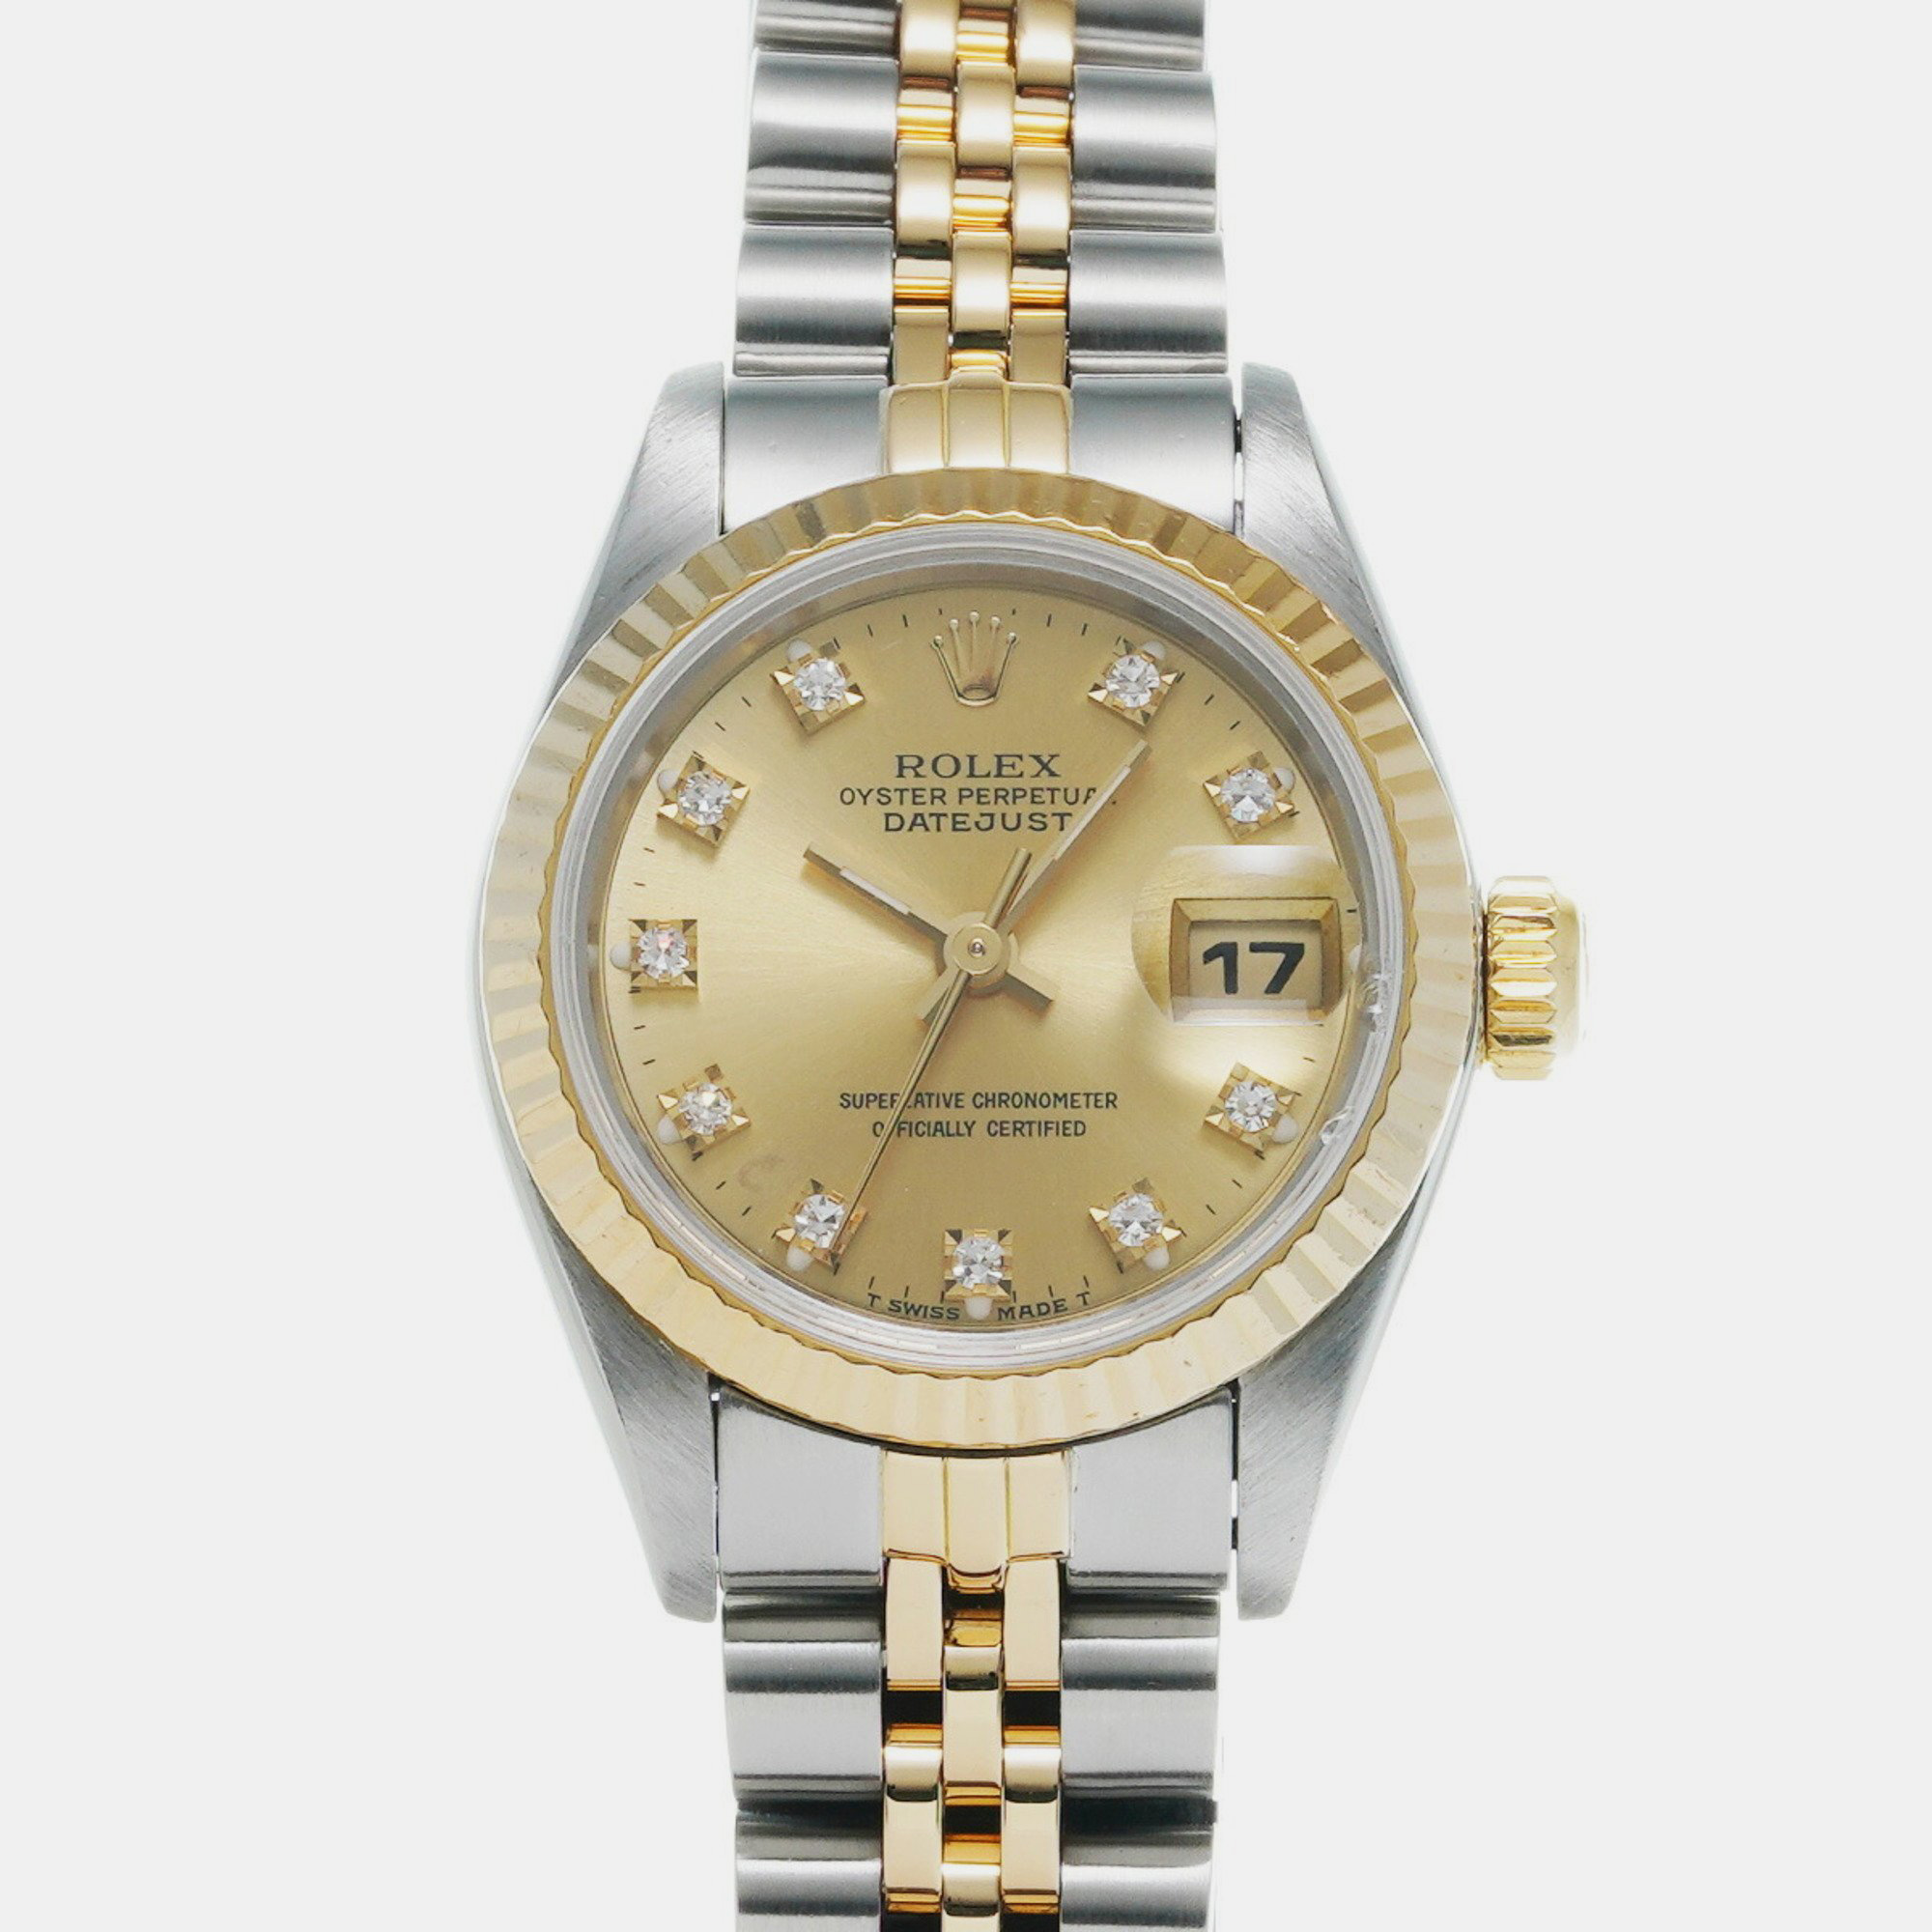 Rolex champagne 18k yellow gold and diamond datejust 69173g automatic women's wristwatch 26mm